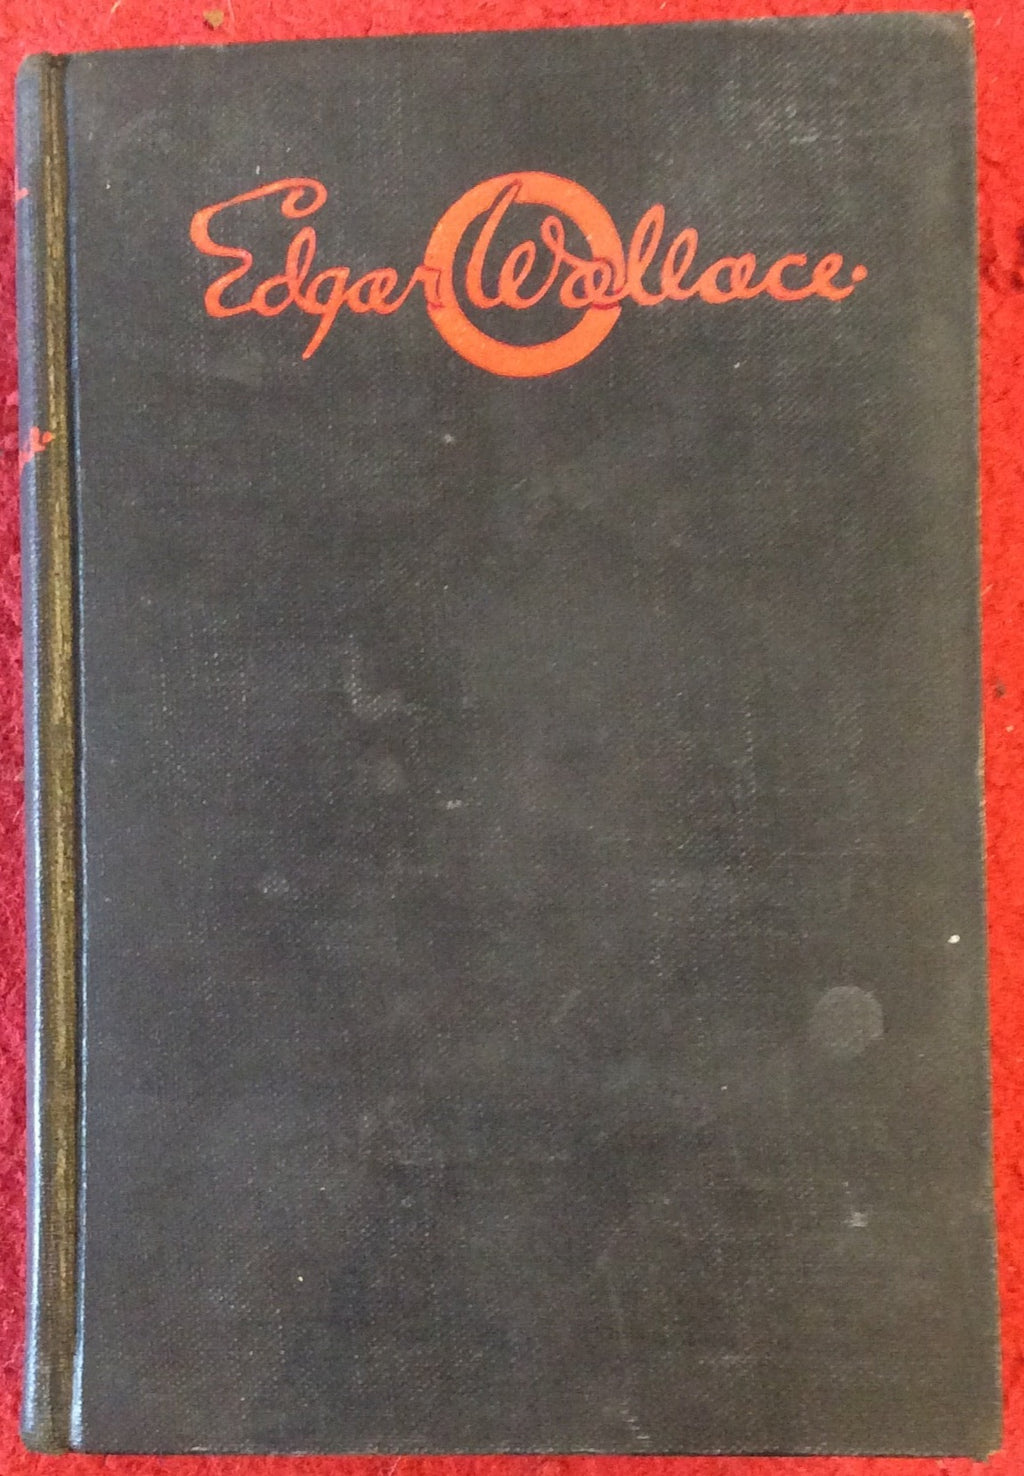 The Devil Man, Edgar Wallace, A. L. Burt Co., 1931 *